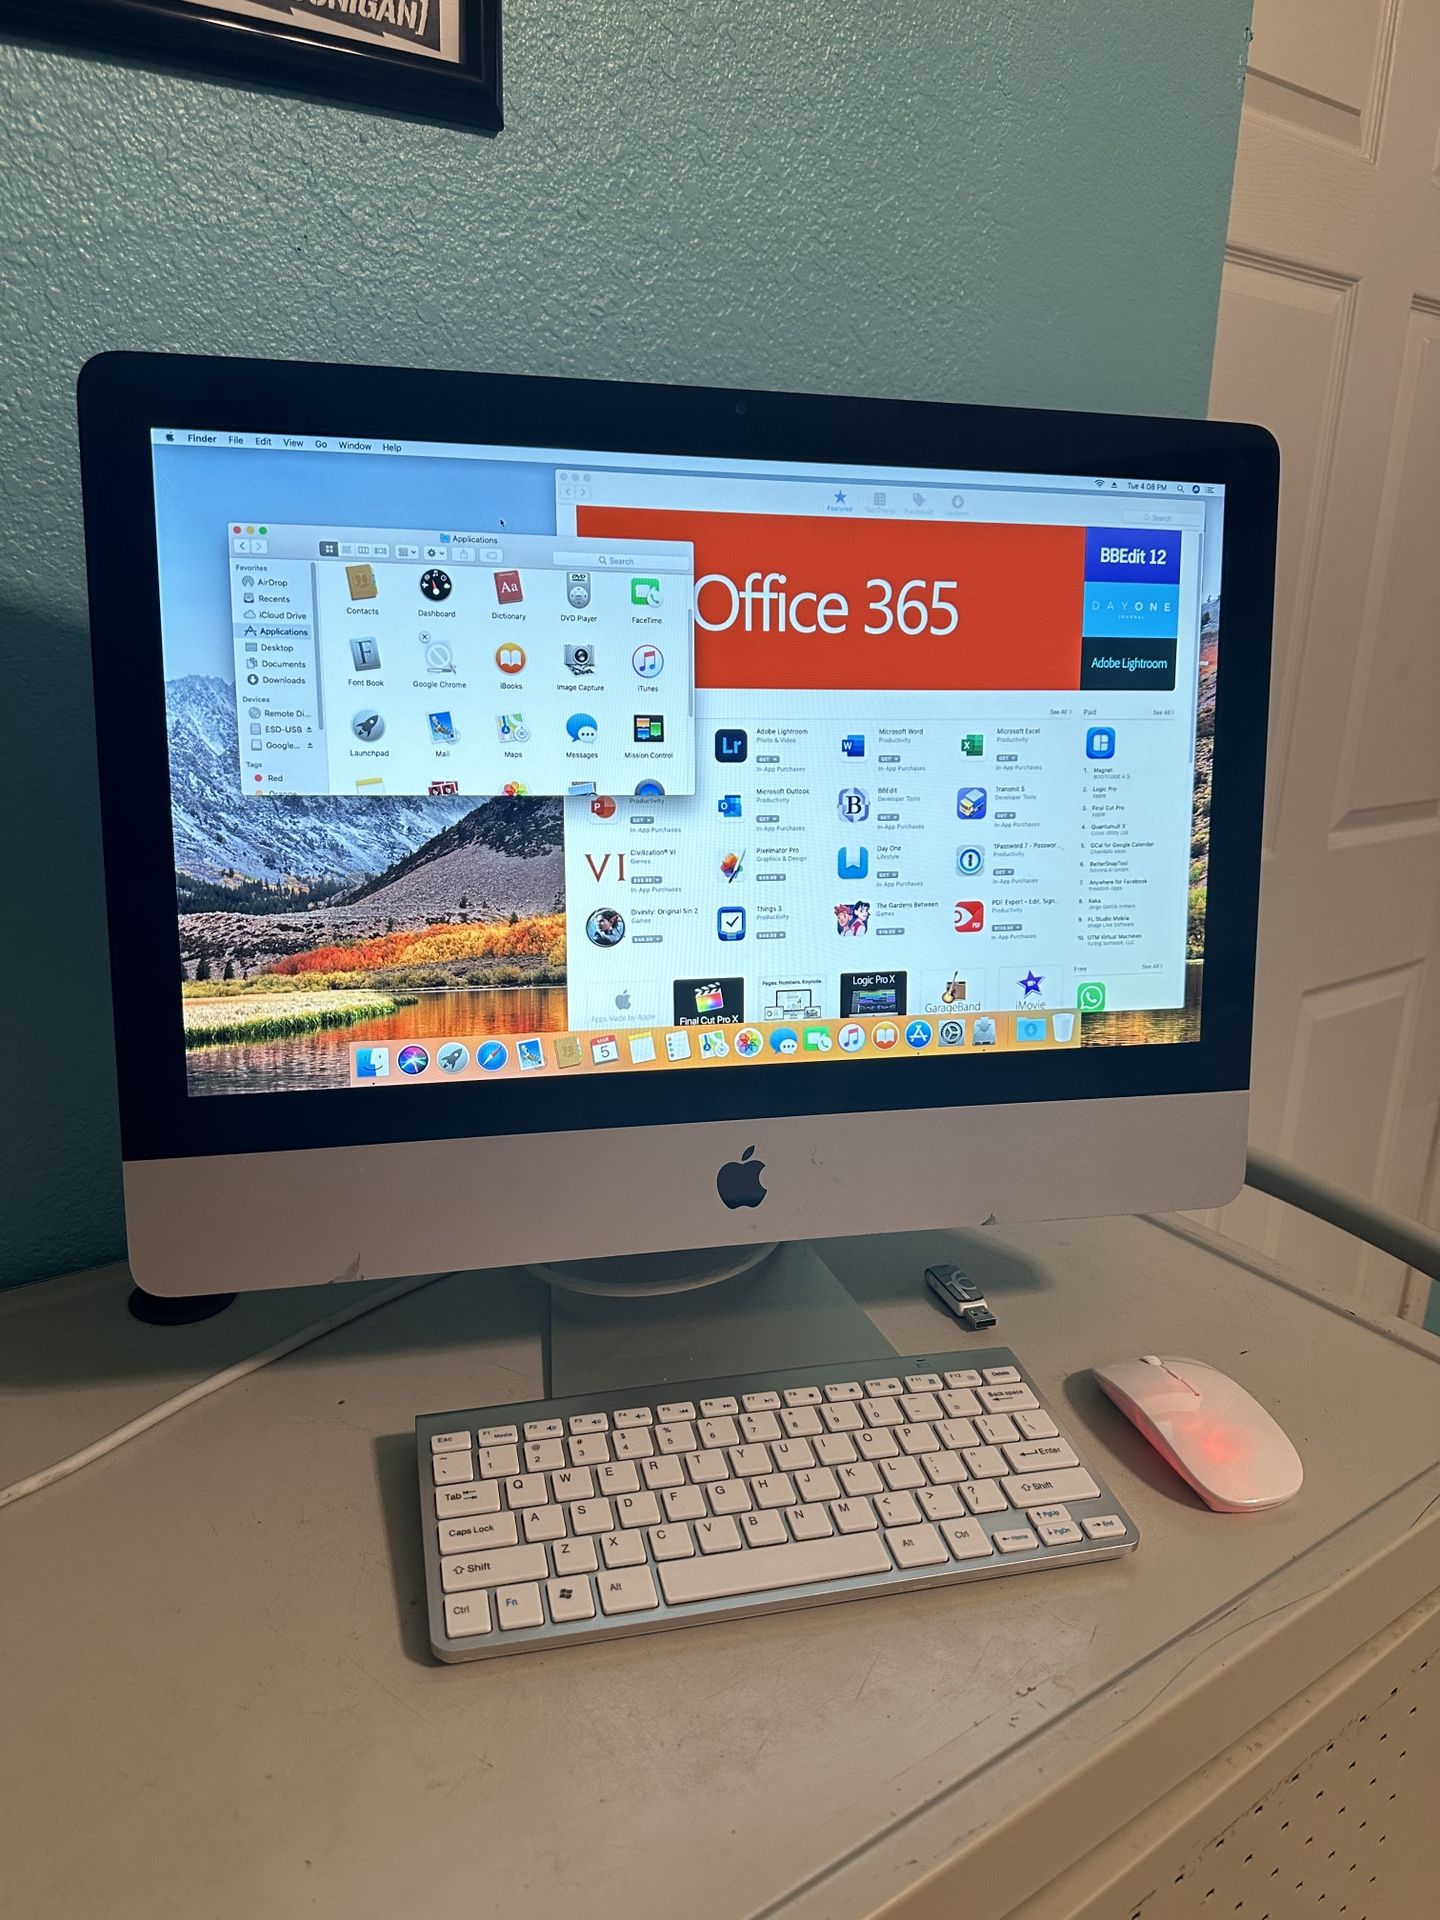 Apple iMac computer 